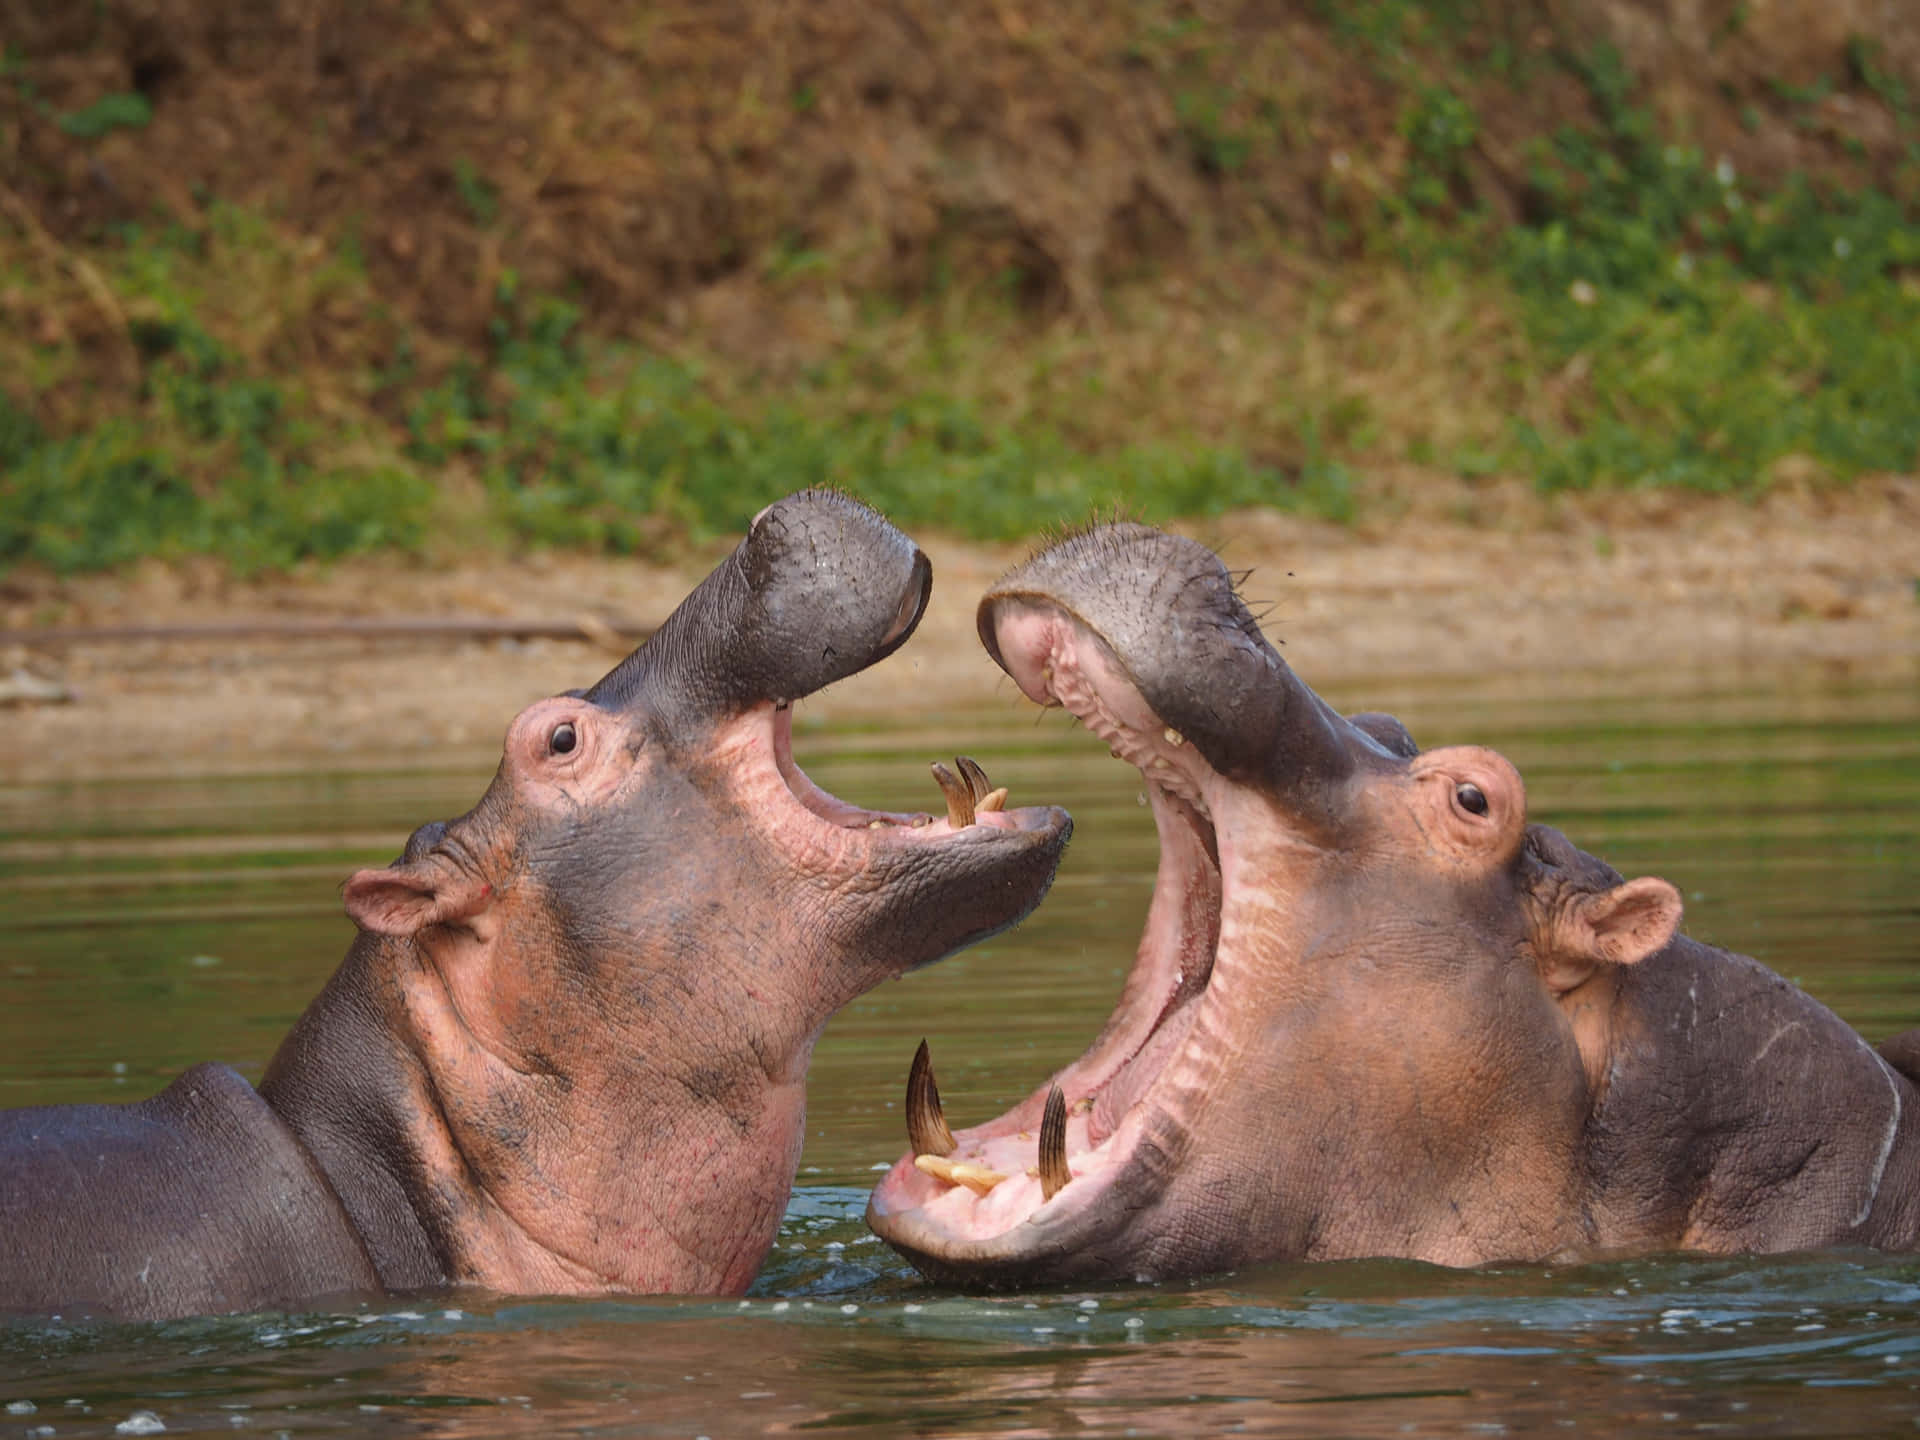 Hippopotamusen Rolig Bild Av En Flodhäst Som Leker I Vattnet.